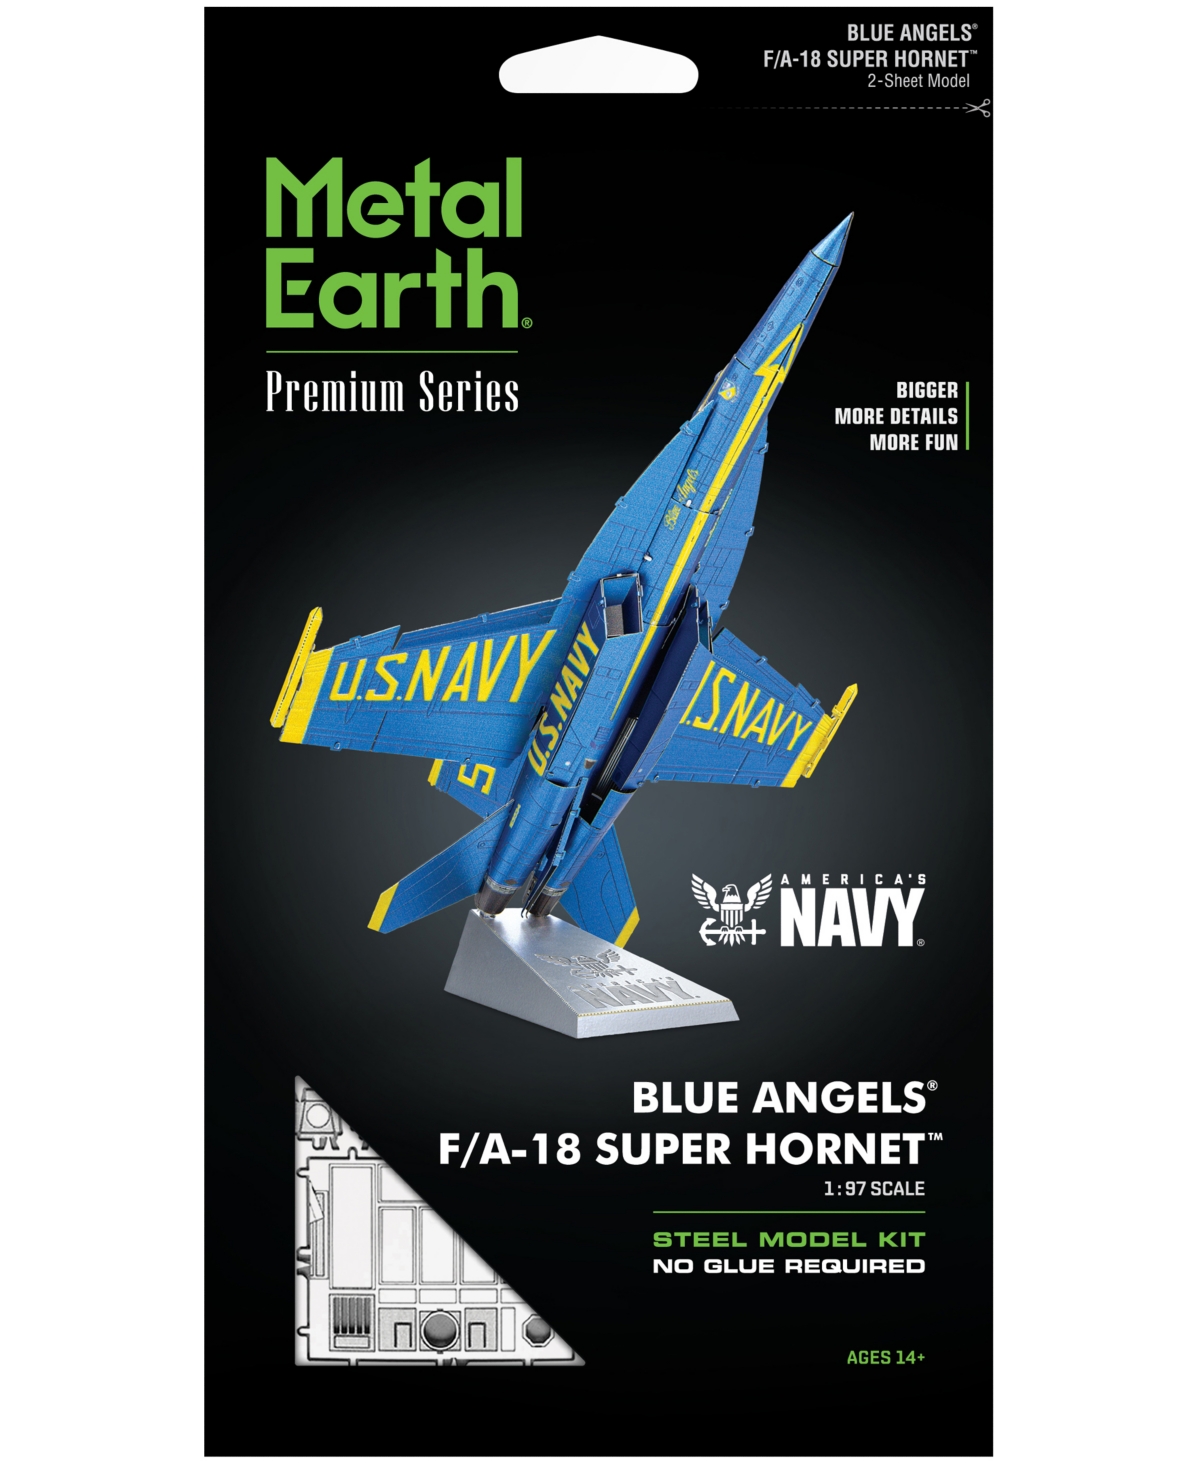 Shop University Games Fascinations Metal Earth Premium Series Iconx 3d Metal Model Kit Blue Angels F/a-18 Super Hornet In No Color